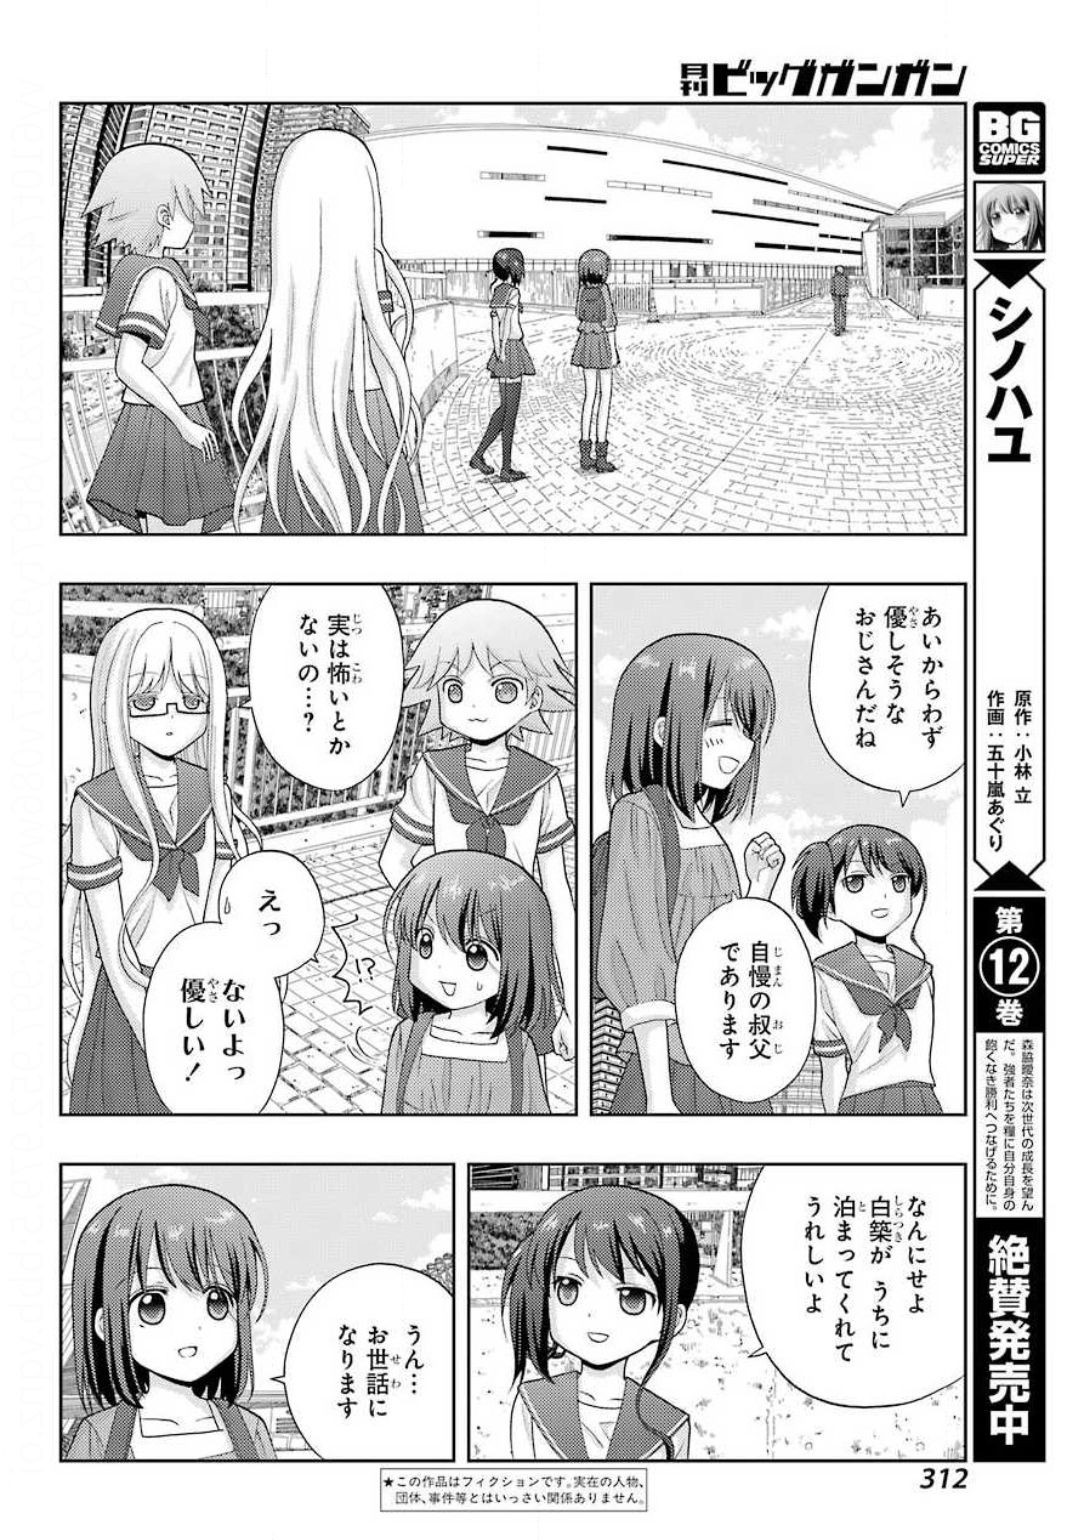 Shinohayu - The Dawn of Age Manga - Chapter 079 - Page 2